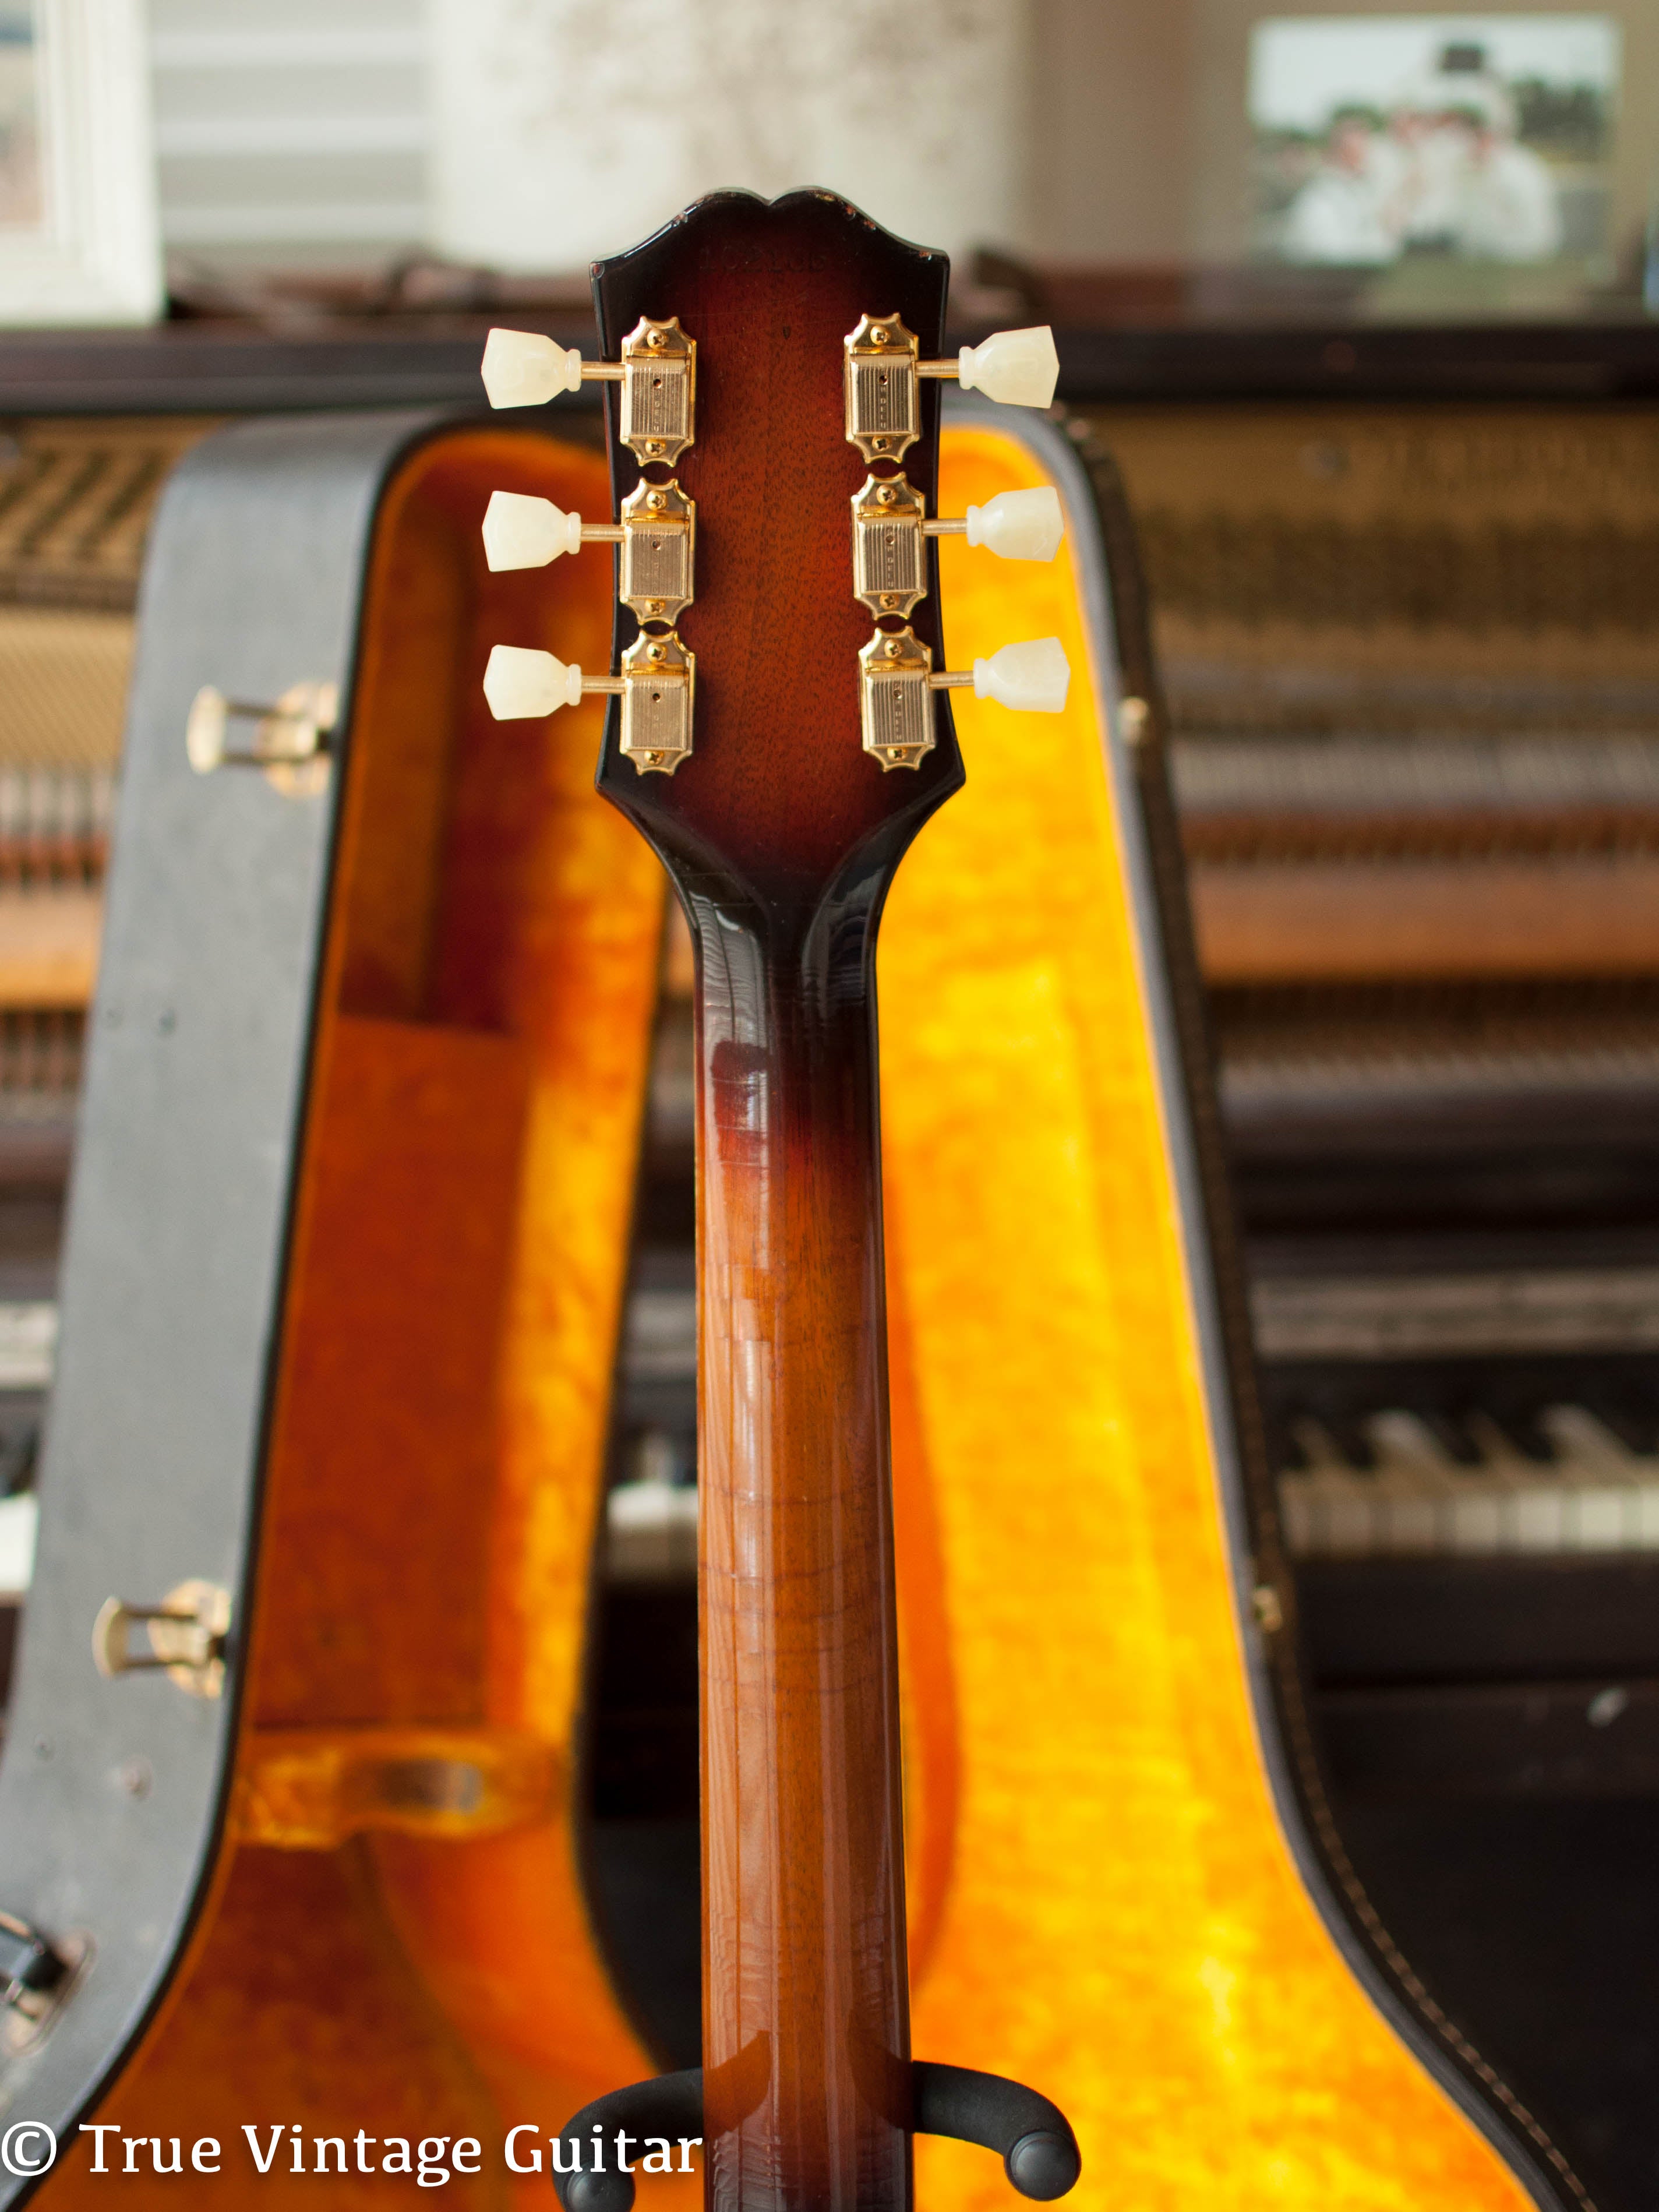 Sunburst back of neck, Vintage 1963 Epiphone FT-110 Frontier acoustic guitar, engraved cactus lariat pickguard